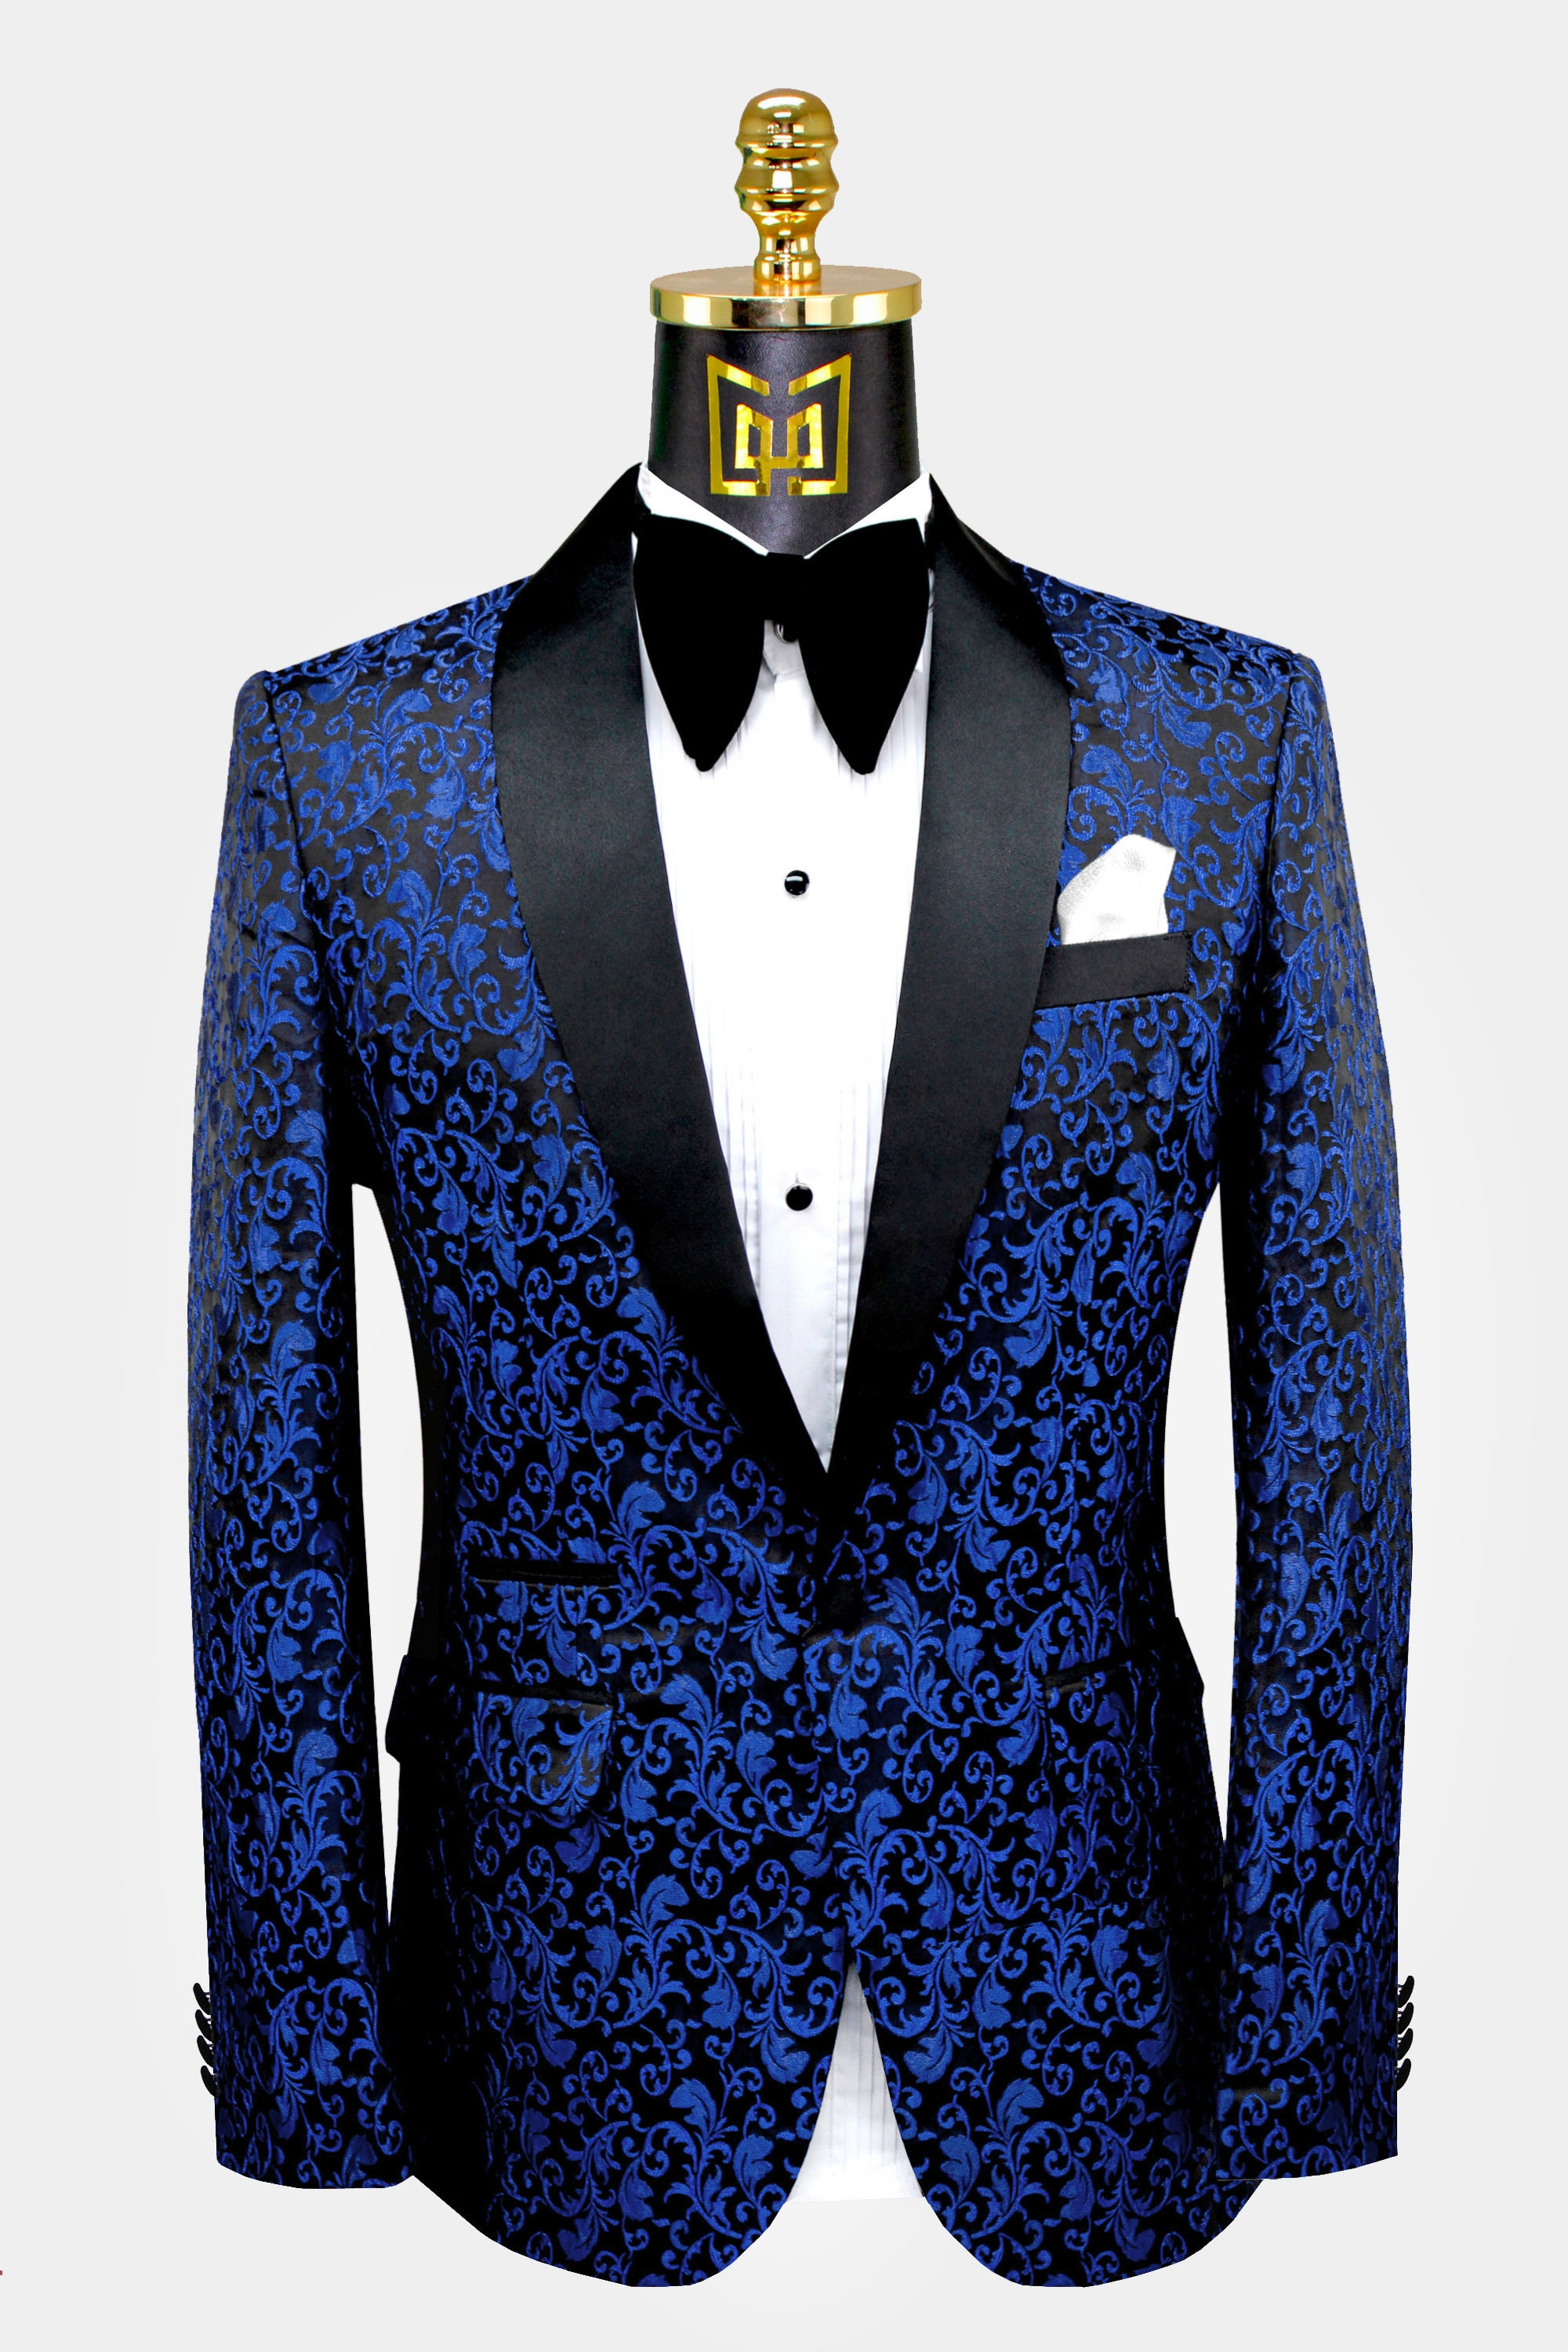 Mens-Royal-Blue-Paisley-Tuxedo-Jacket-Wedding-Groom-Prom-Blazer-from-Gentlemansguru.com_-2